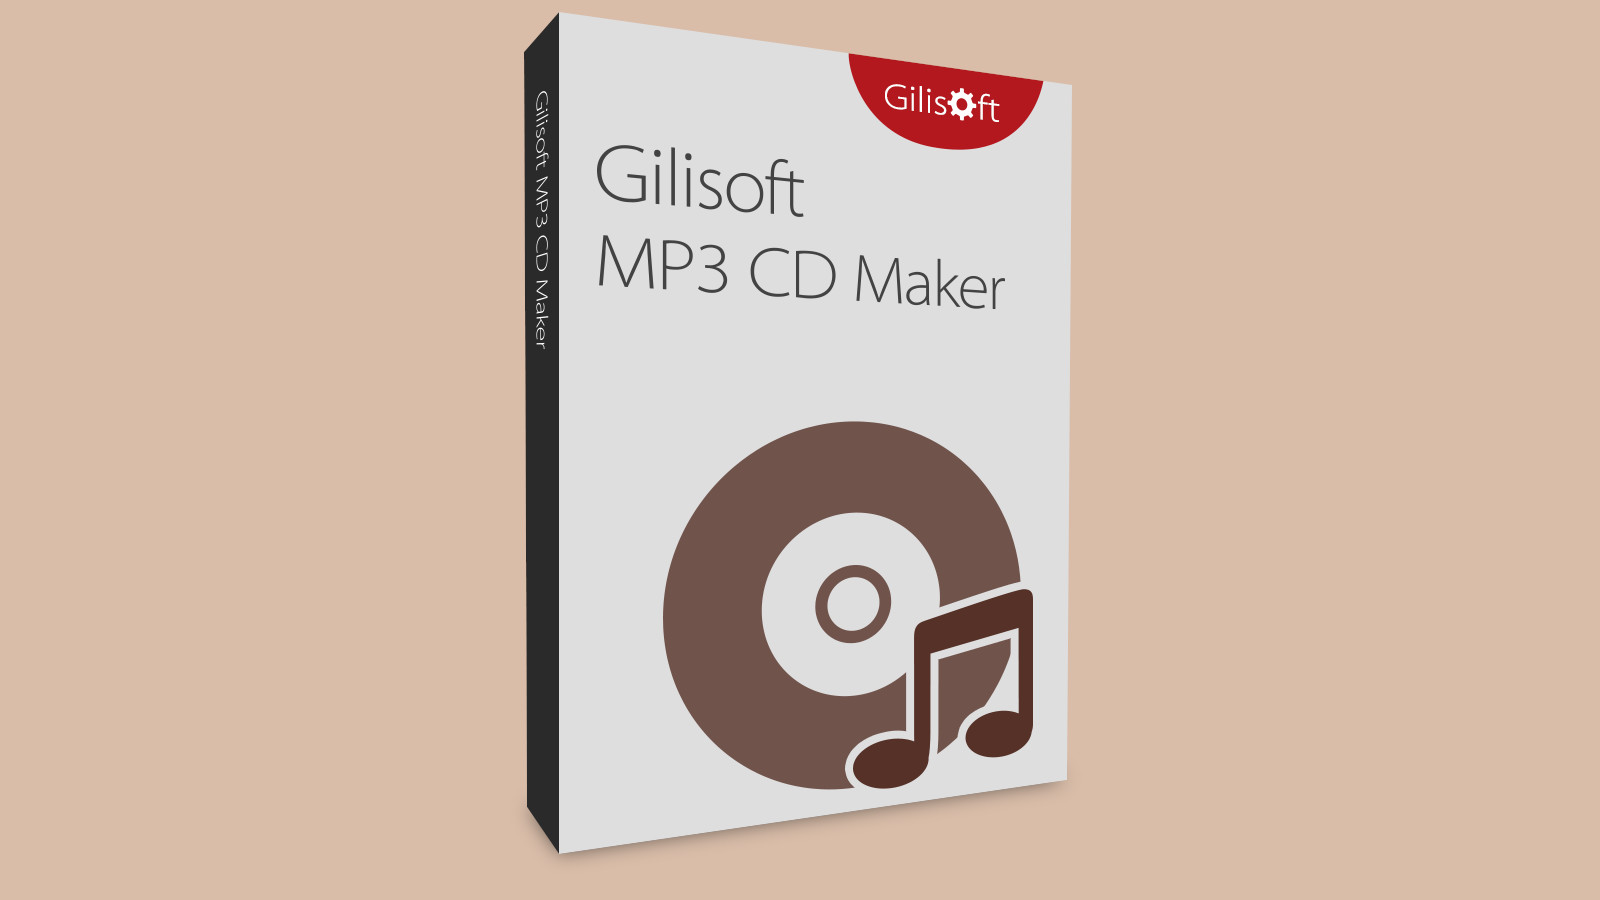 Gilisoft MP3 CD Maker CD Key, 5.65 usd